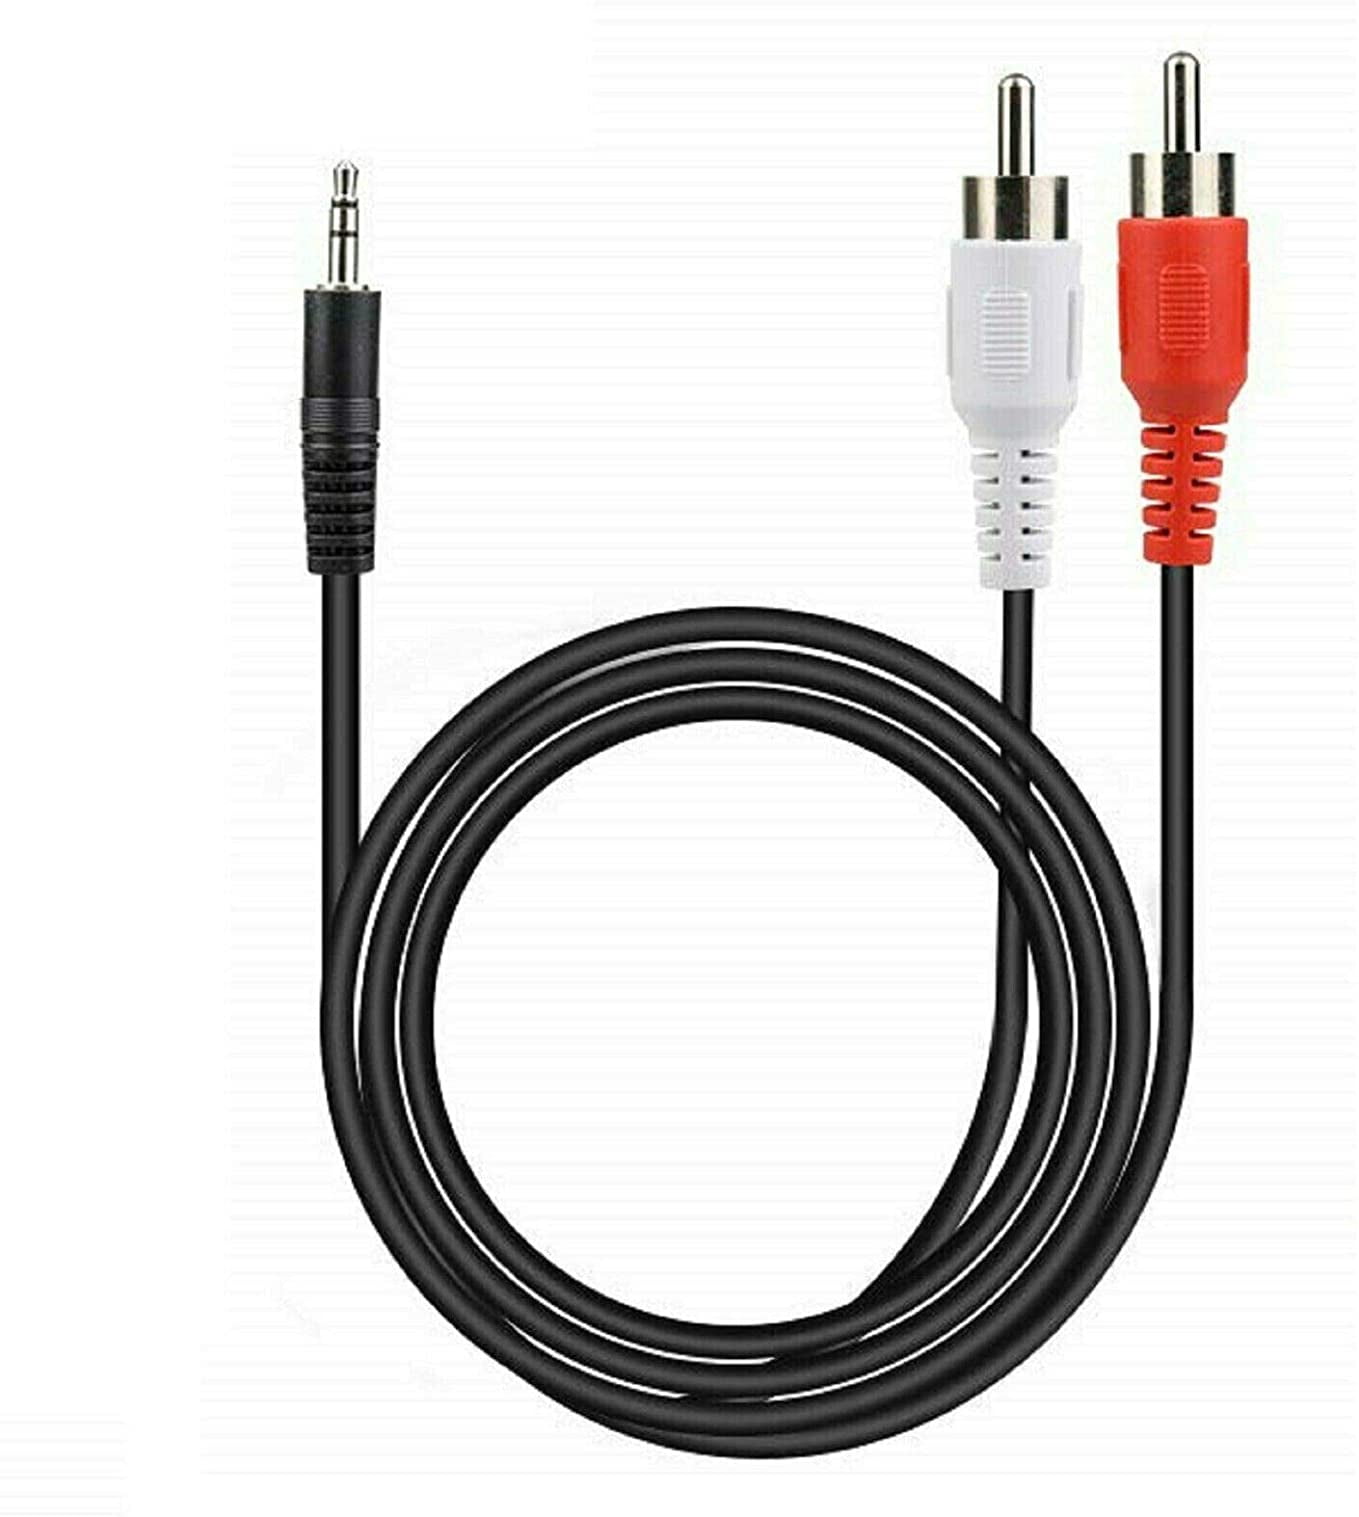 Cables para altavoces (2ud) multimarca Phonocar 04653